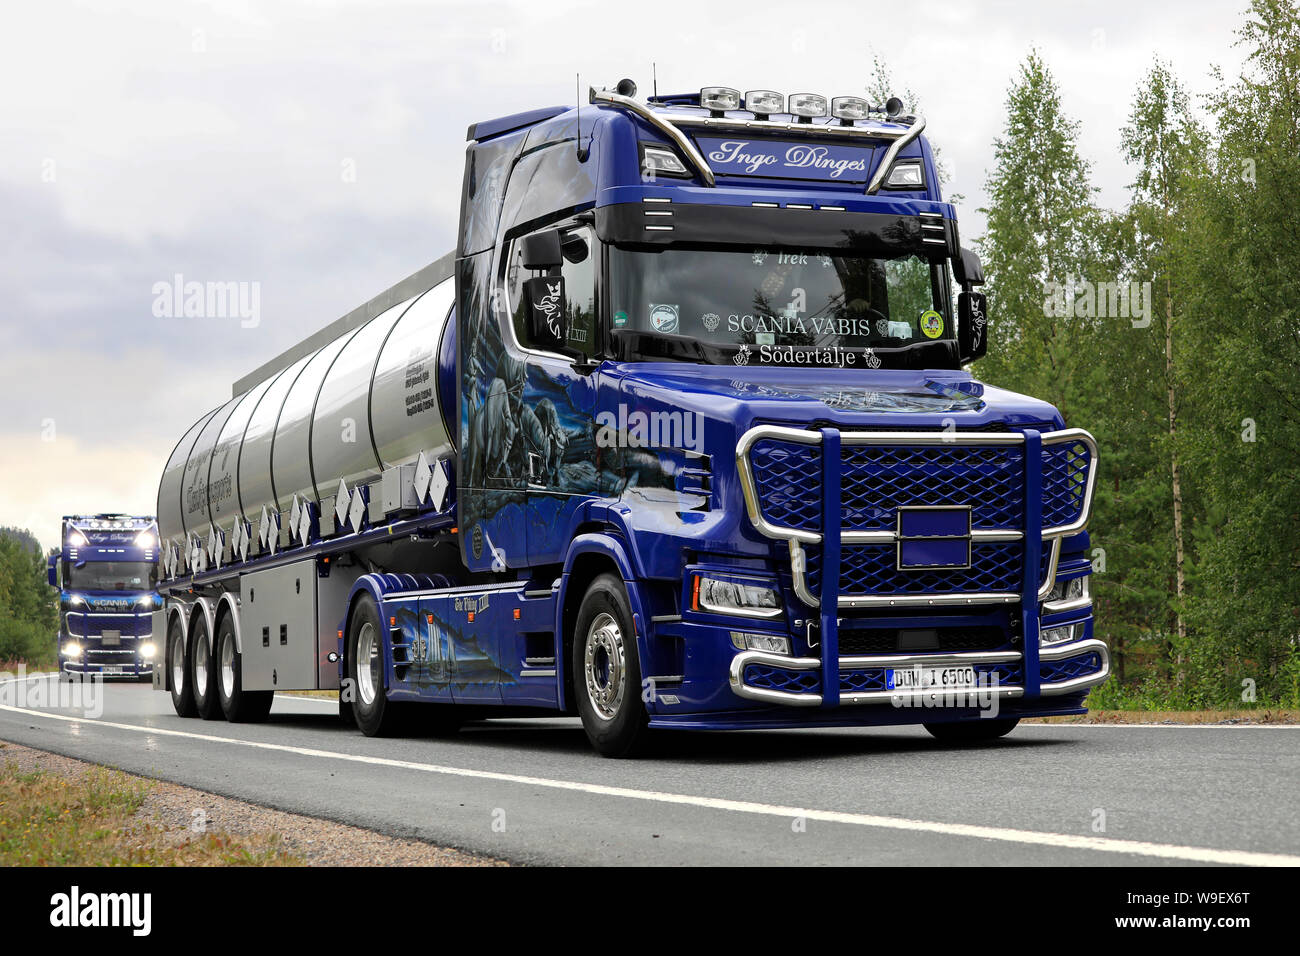 Scania truck front semi truck fotografías e imágenes de alta resolución -  Alamy